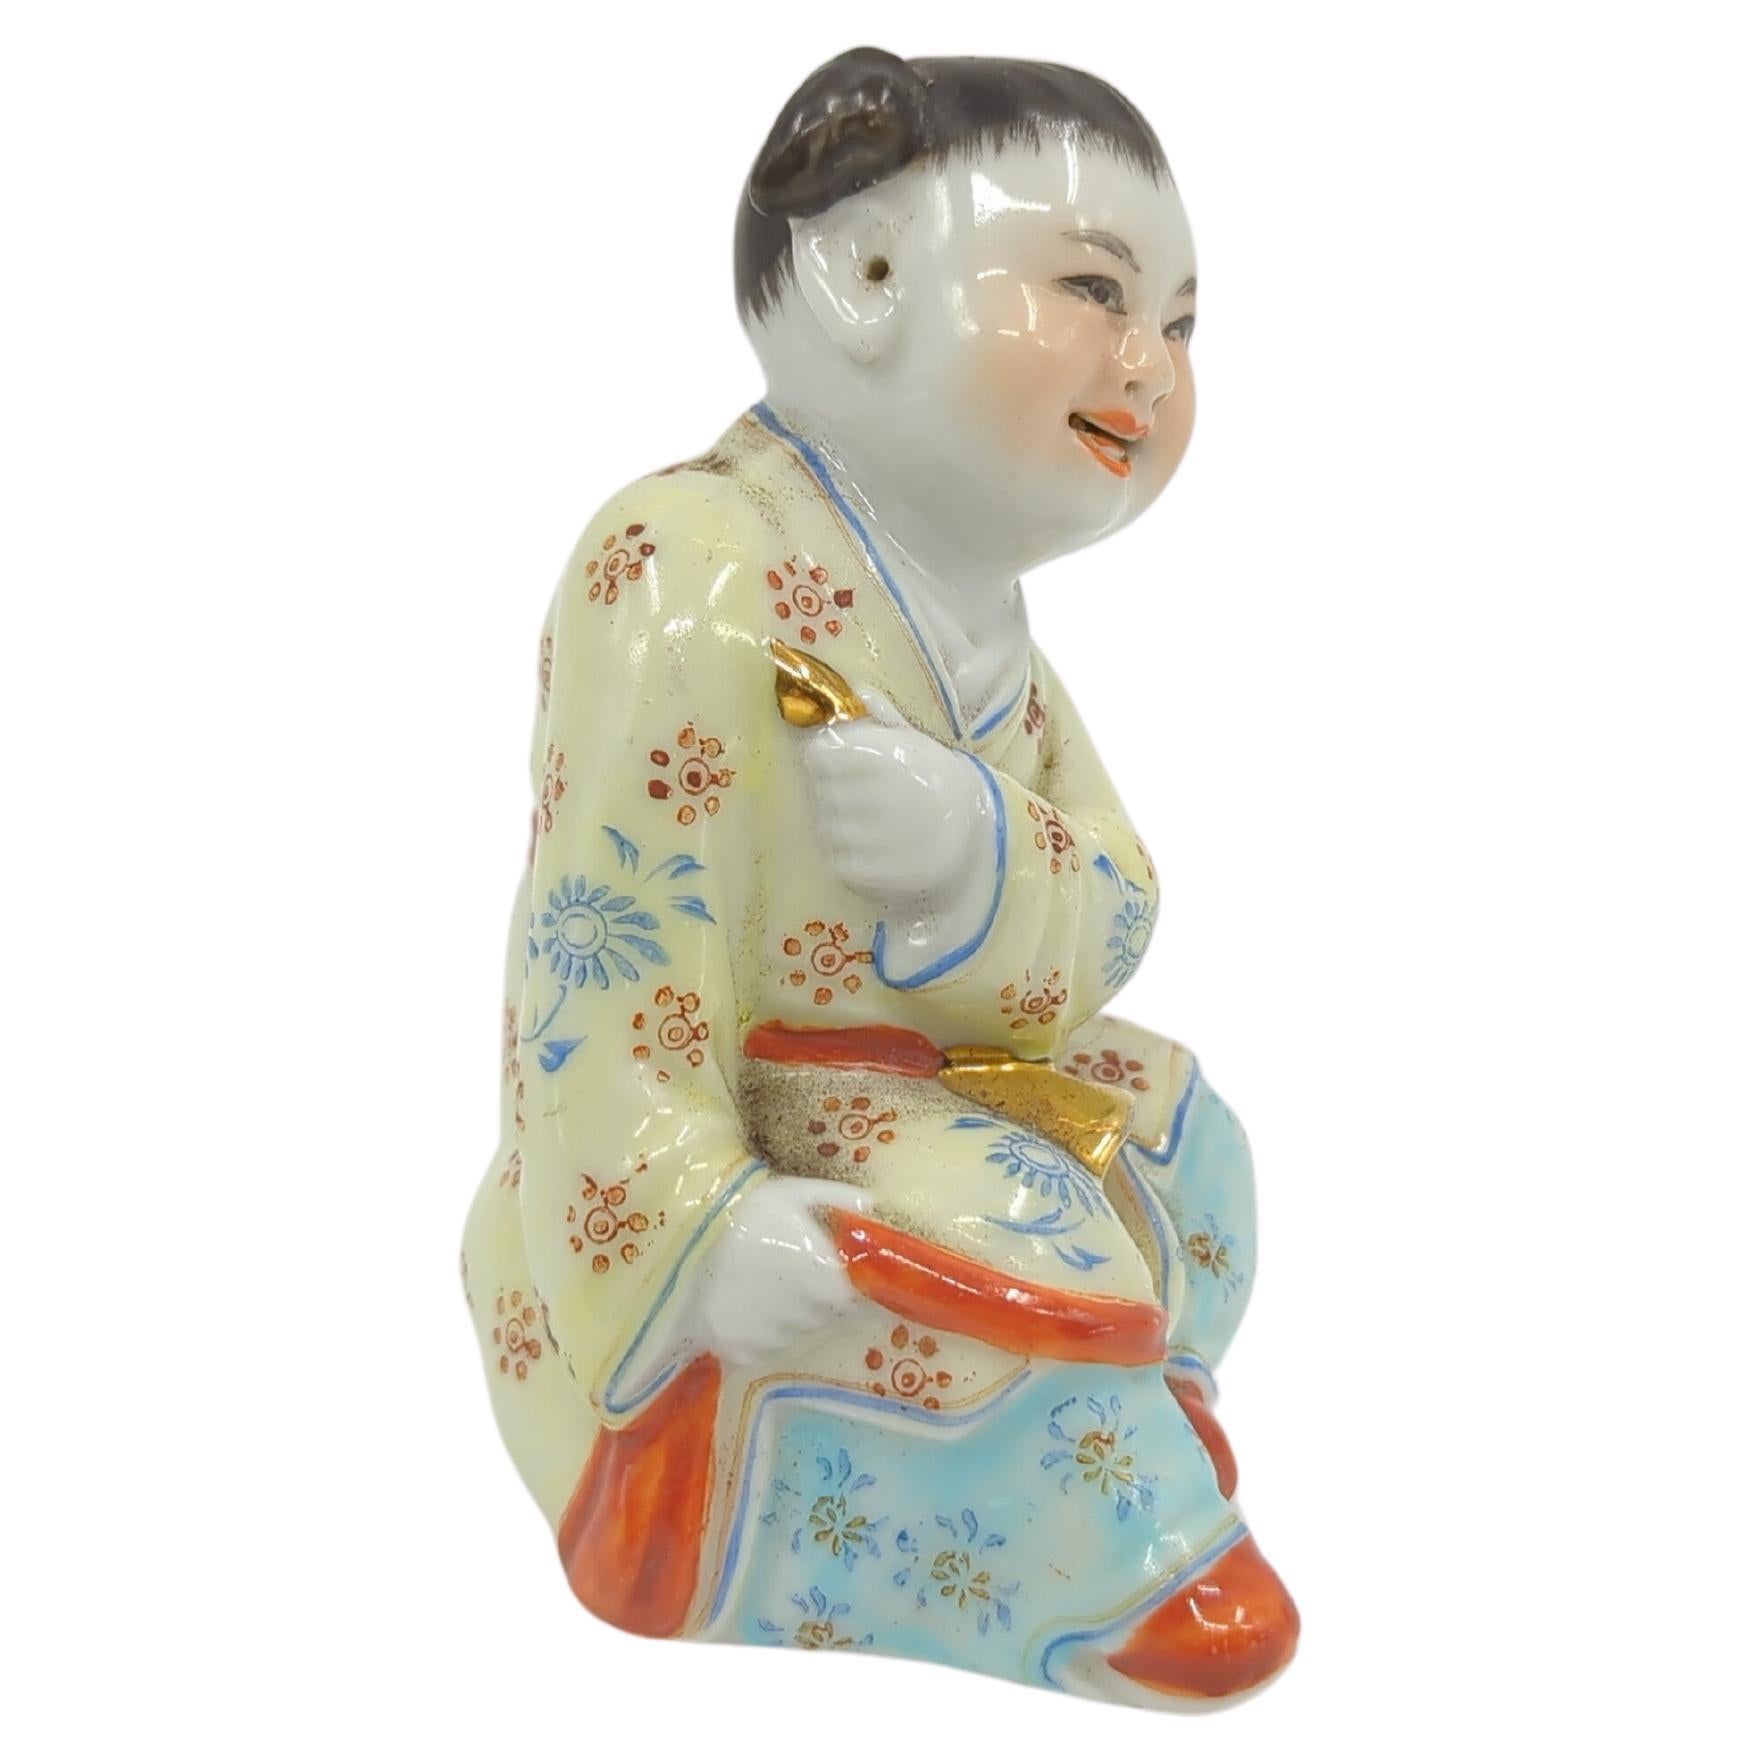 Chinese Export Vintage Chinese Fencai Porcelain Figure Playful Sitting Child/Boy c.1926 ROC For Sale